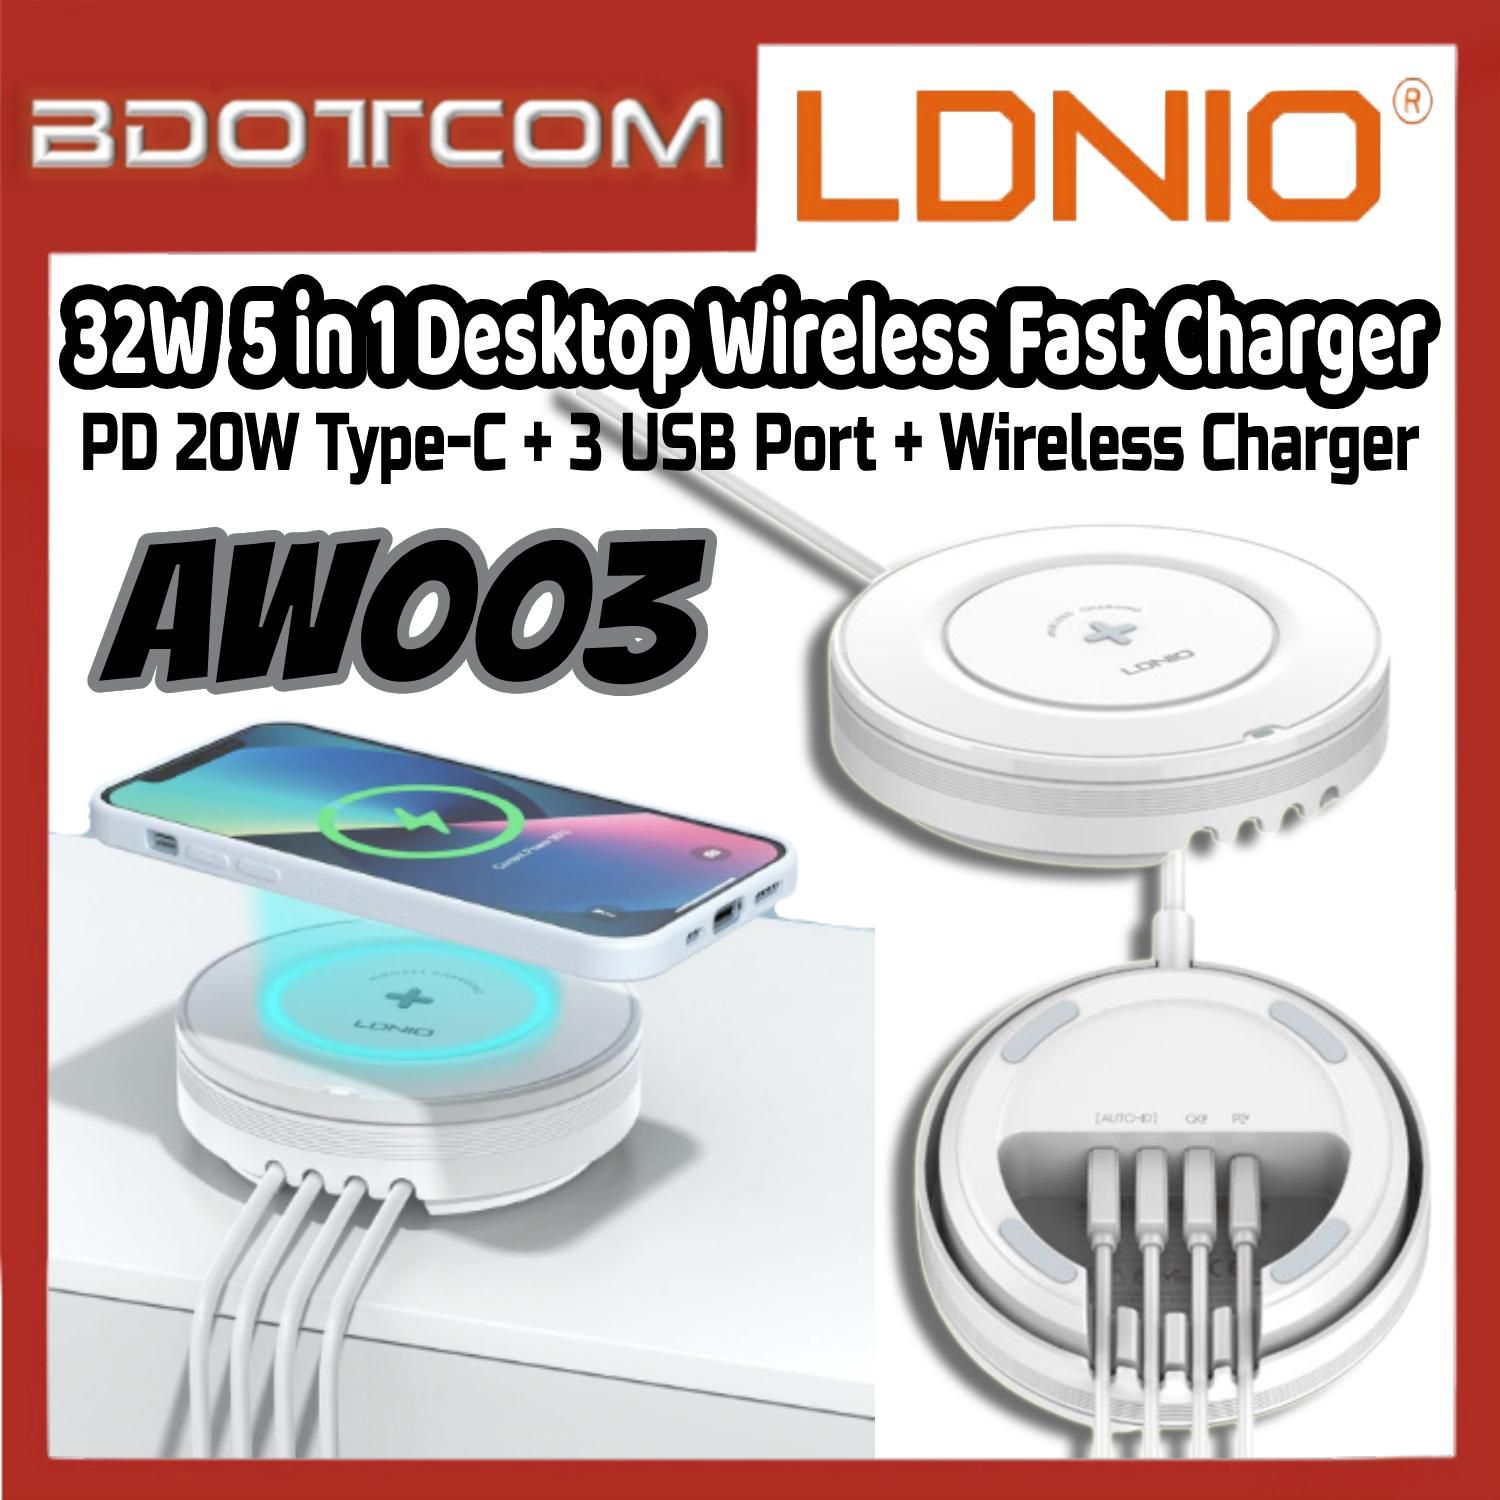 LDNIO [Ready Stock]  AW003 32W PD Type-C + 3 USB Ports Desktop Wireless 5 in 1